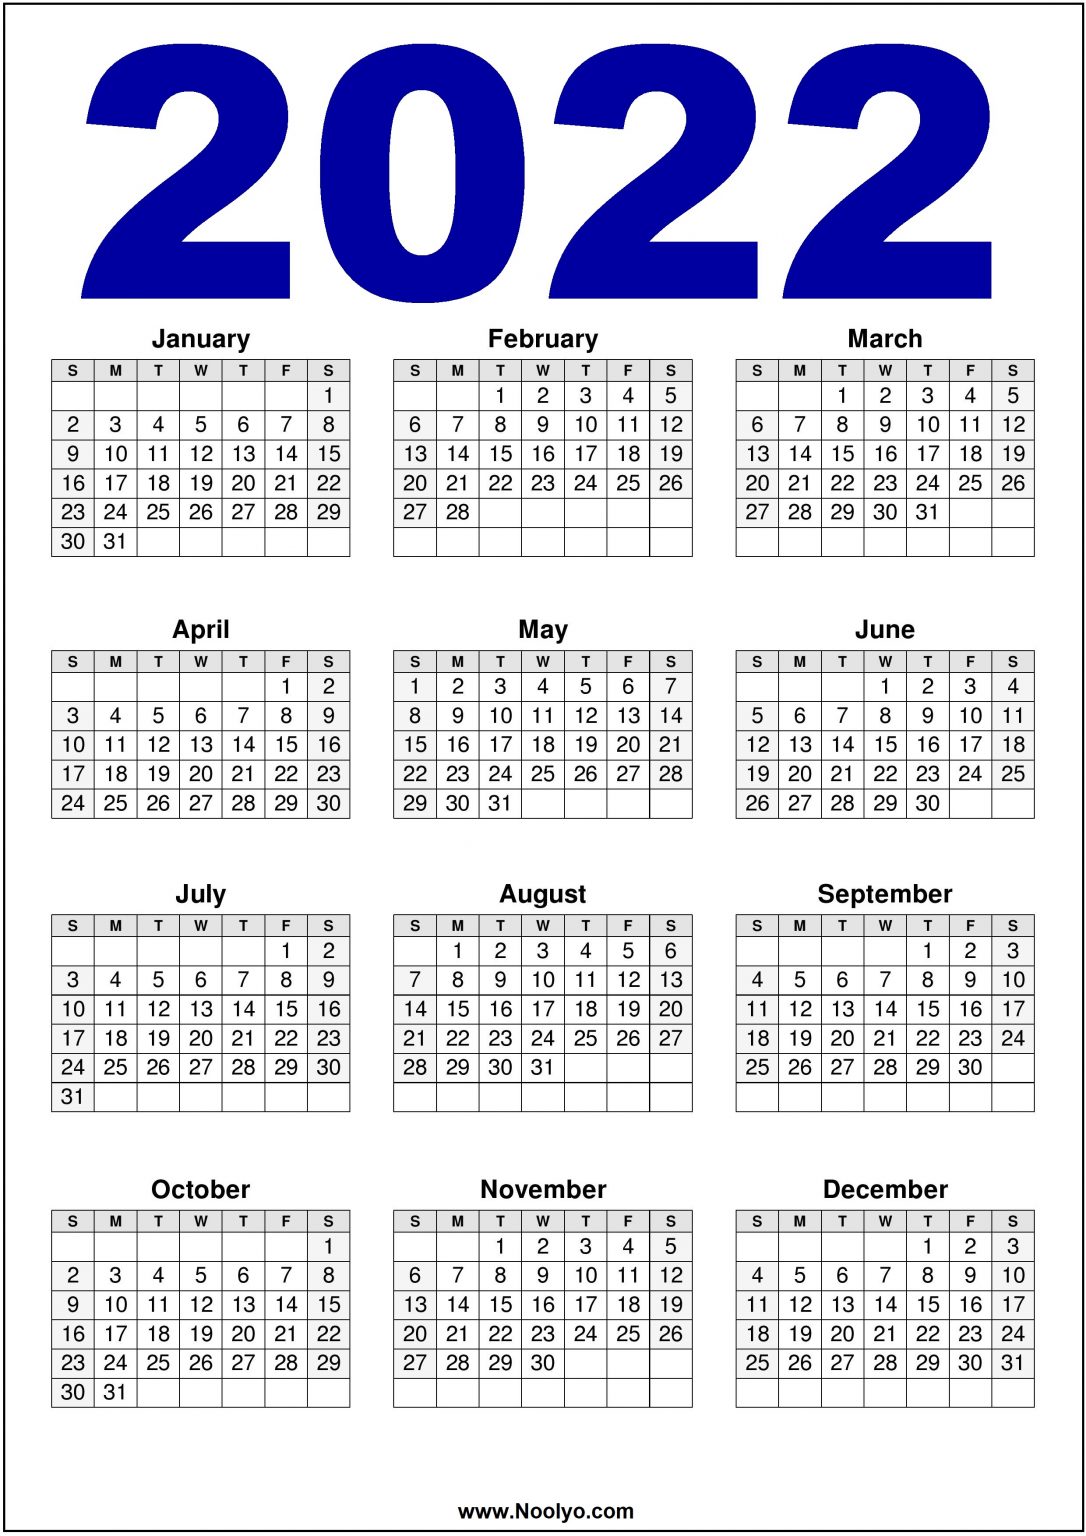 2022 Calendar US Printable – Download Free - Noolyo.com Calendars Printable